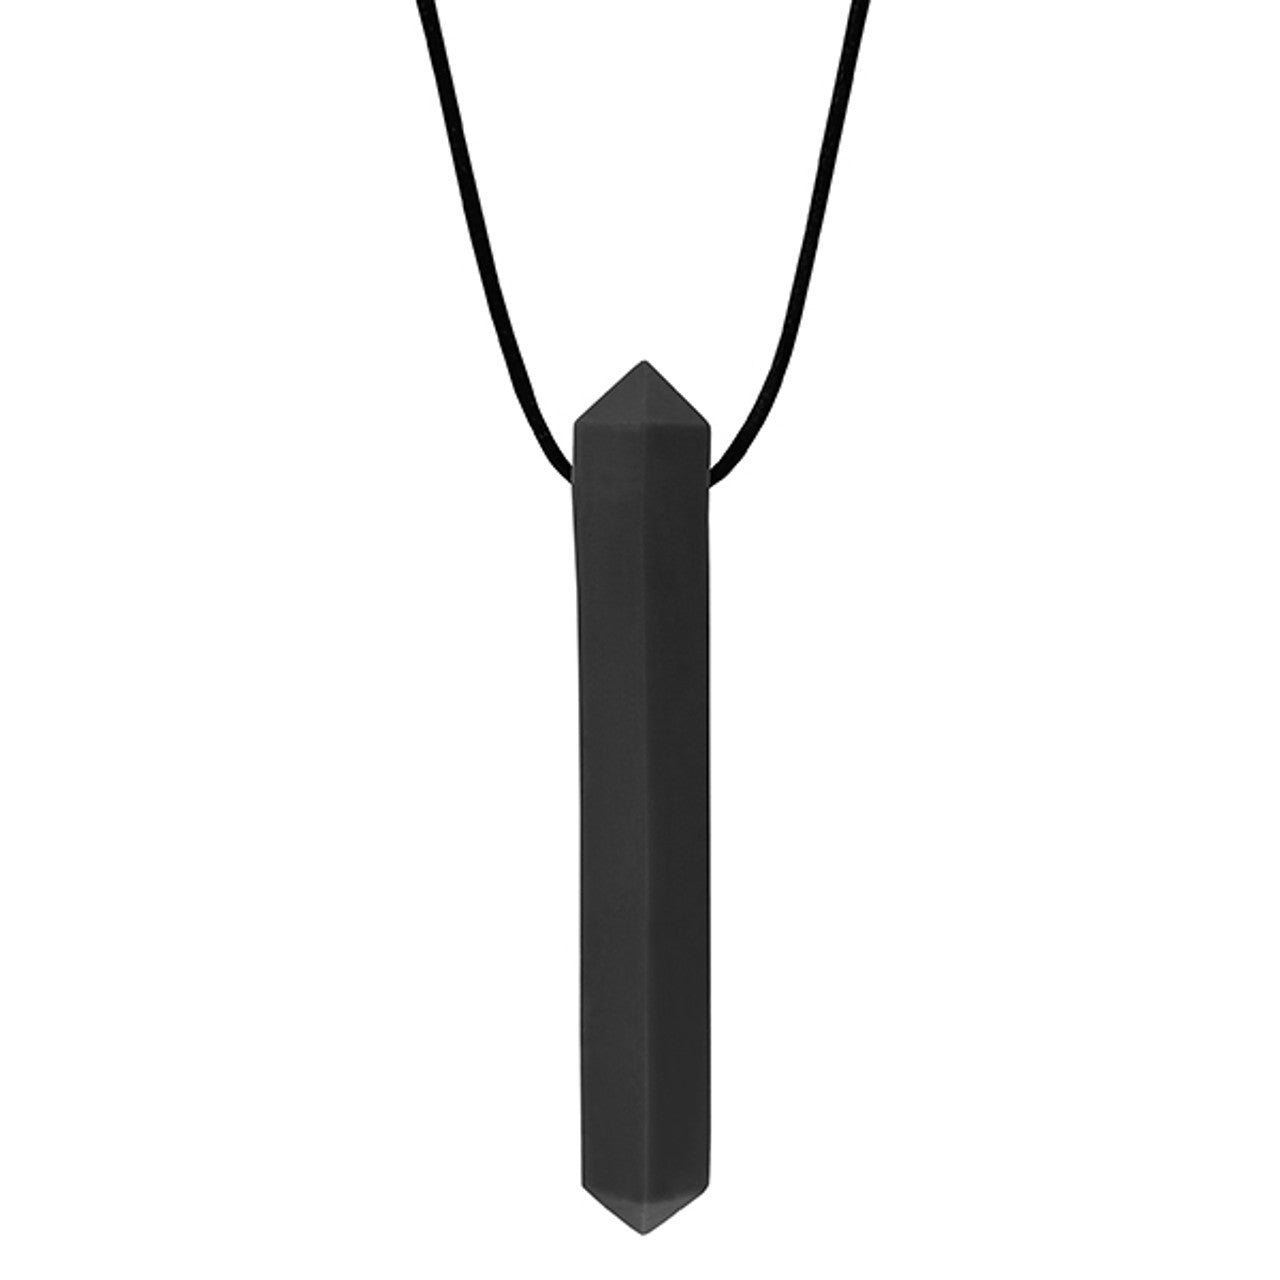 The black Krypto-Bite Chewable Gem Necklace.